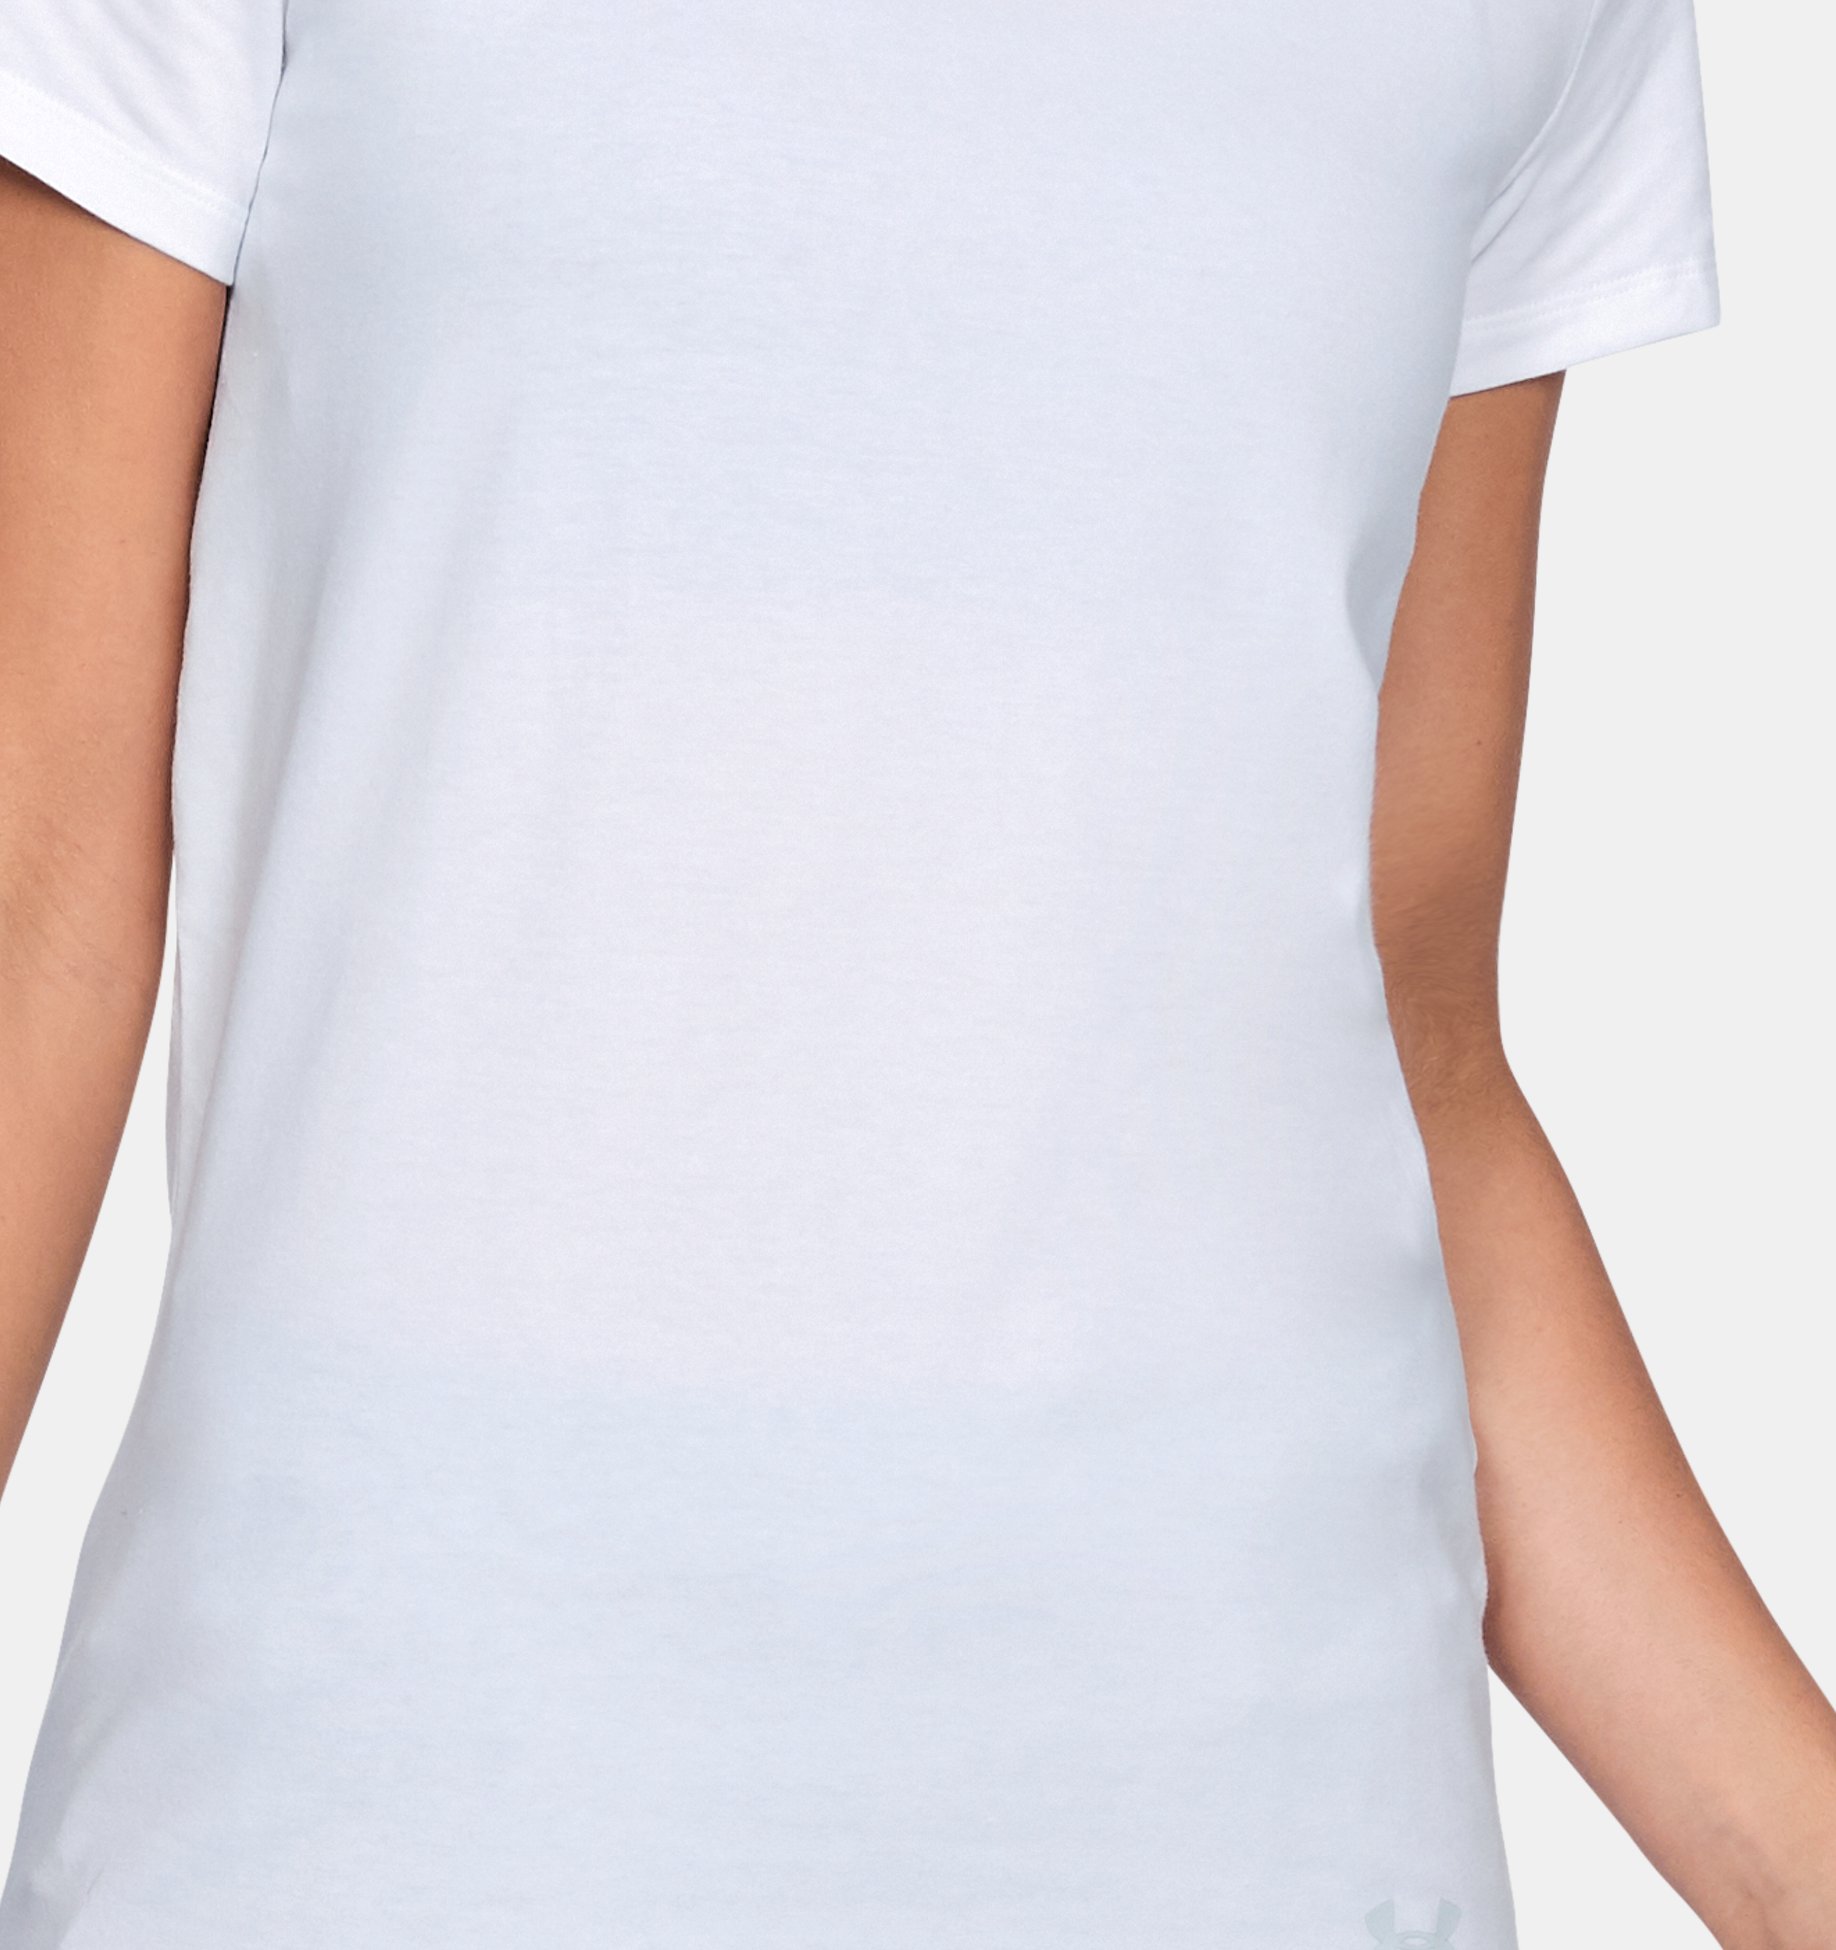 Regan Trouw Panorama Women's UA Charged Cotton® Short Sleeve T-Shirt | Under Armour